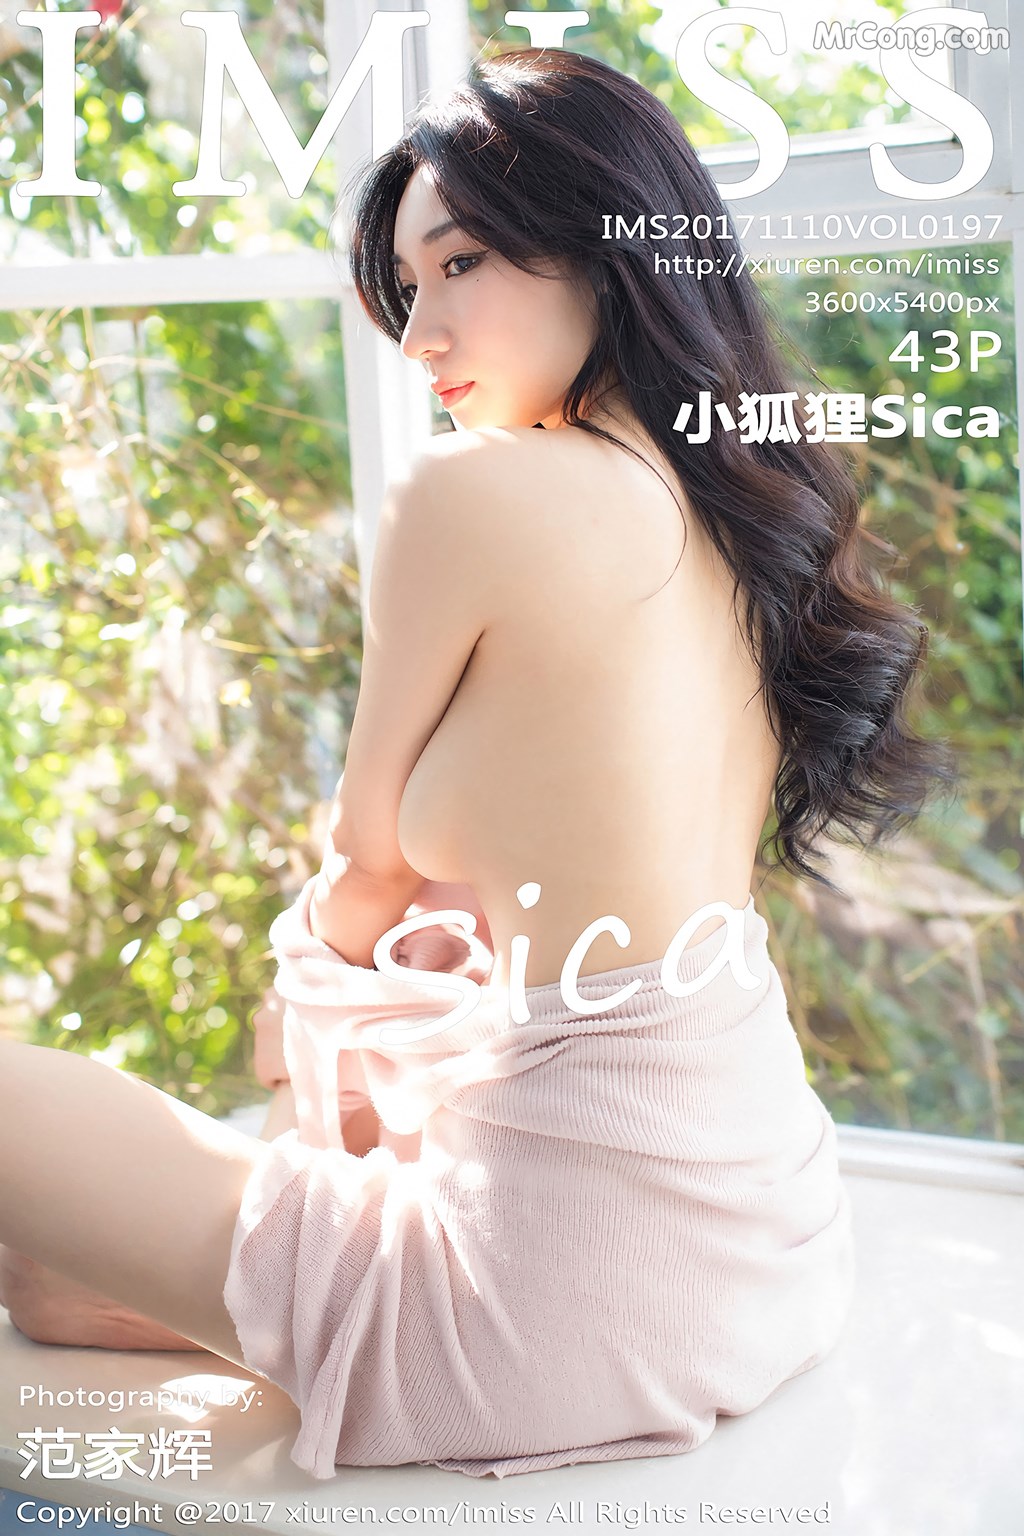 IMISS Vol.197: Model Xiao Hu Li (小 狐狸 Sica) (44 photos) photo 1-0